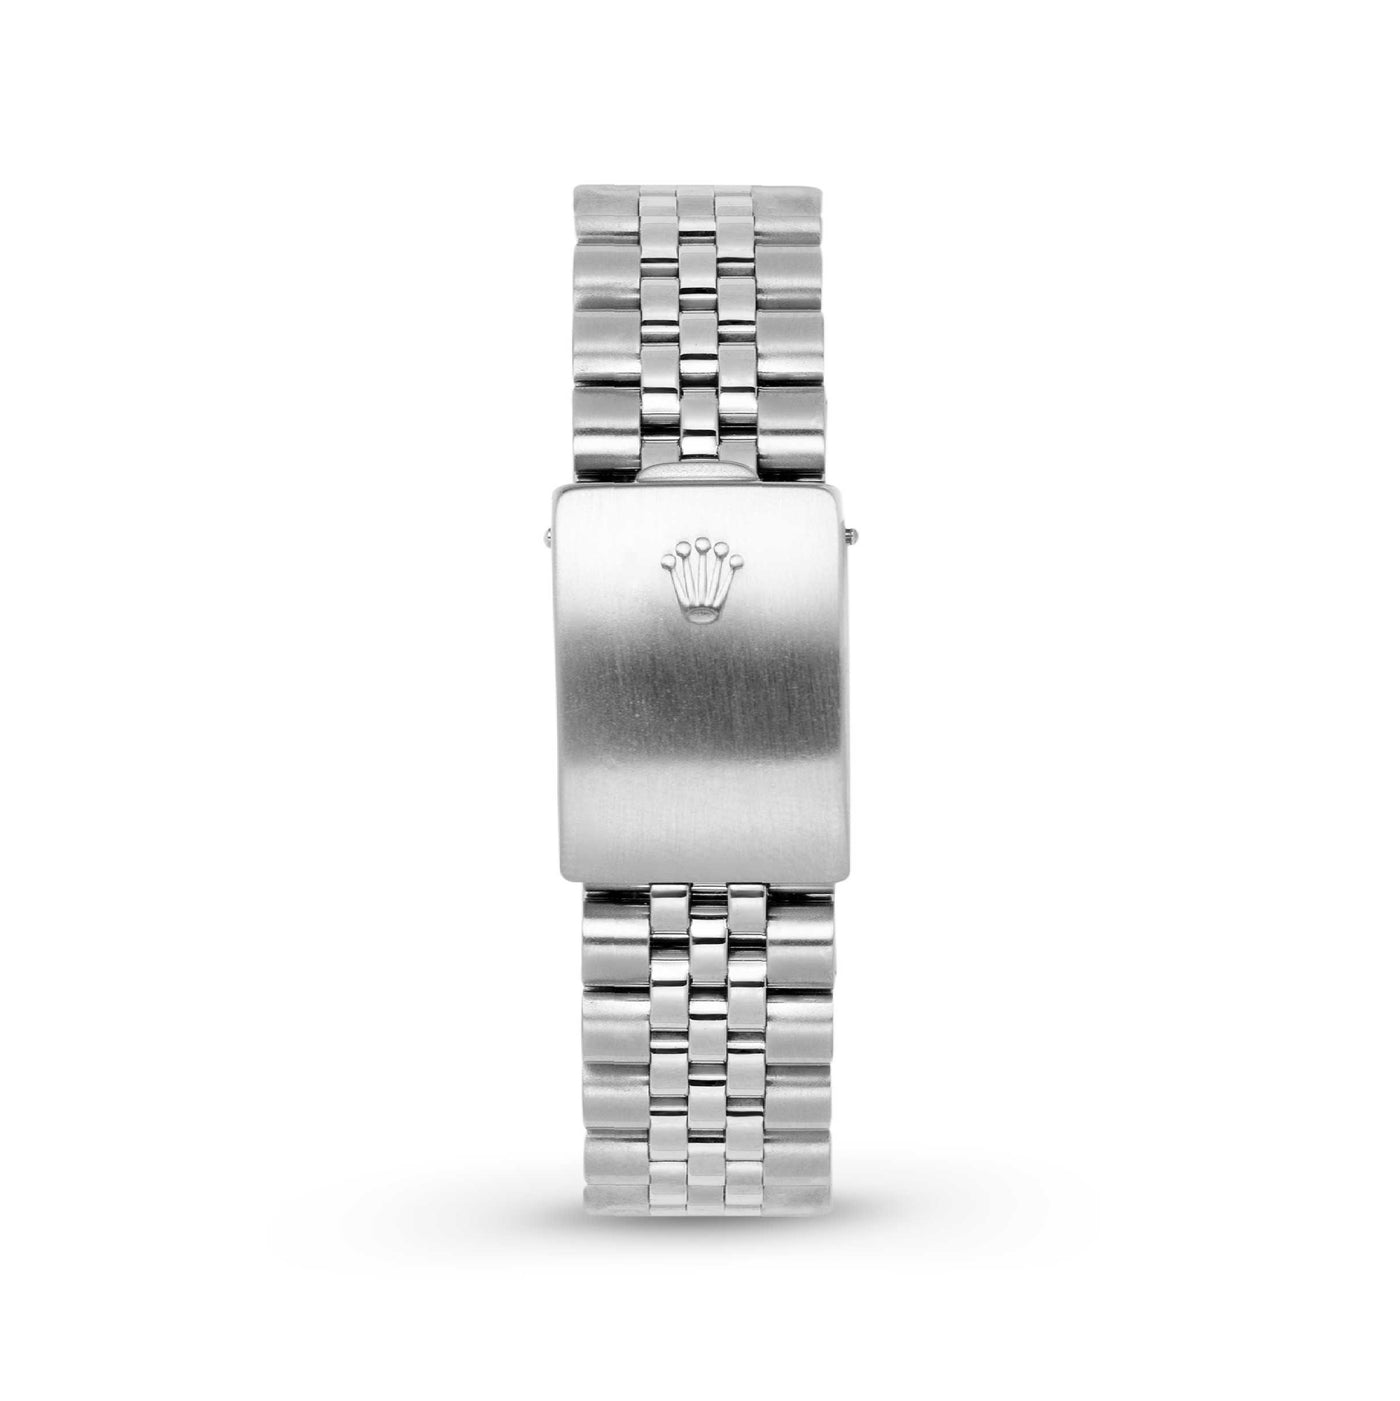 Rolex Datejust Diamond Bezel Watch 36mm Blue Roman Dial | 2.60ct